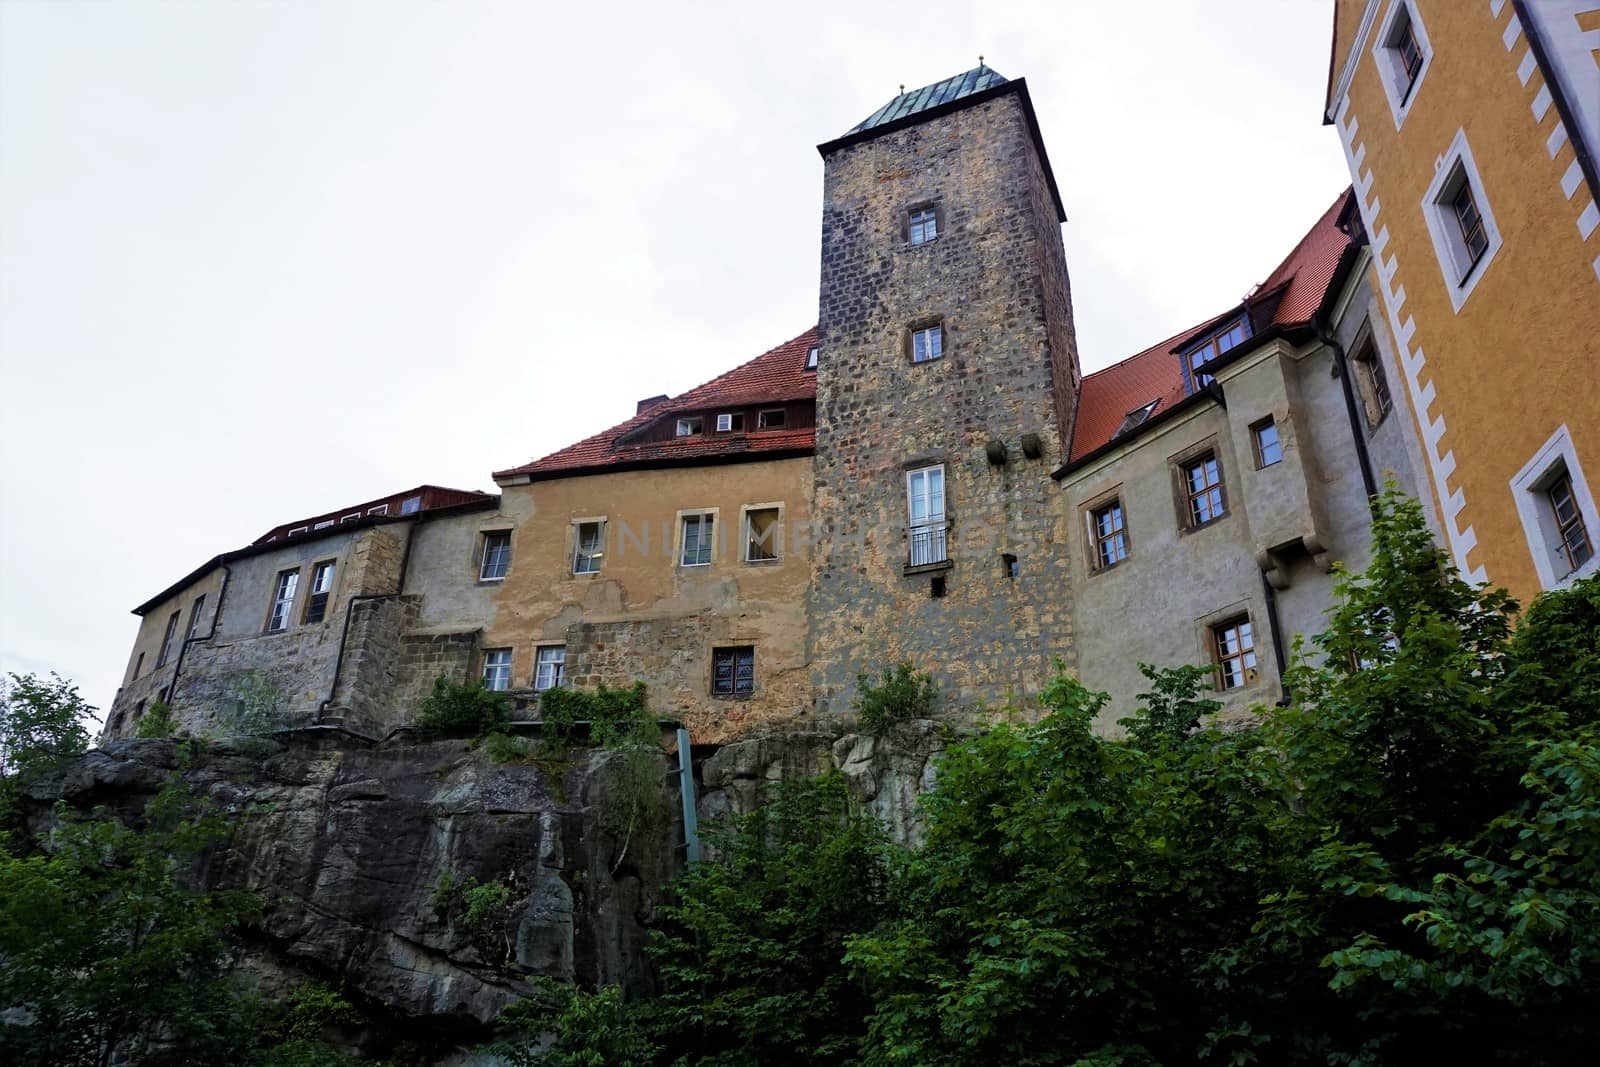 Hohnstein in Saxon Switzerland offers a castle built on sandstone rocks by pisces2386